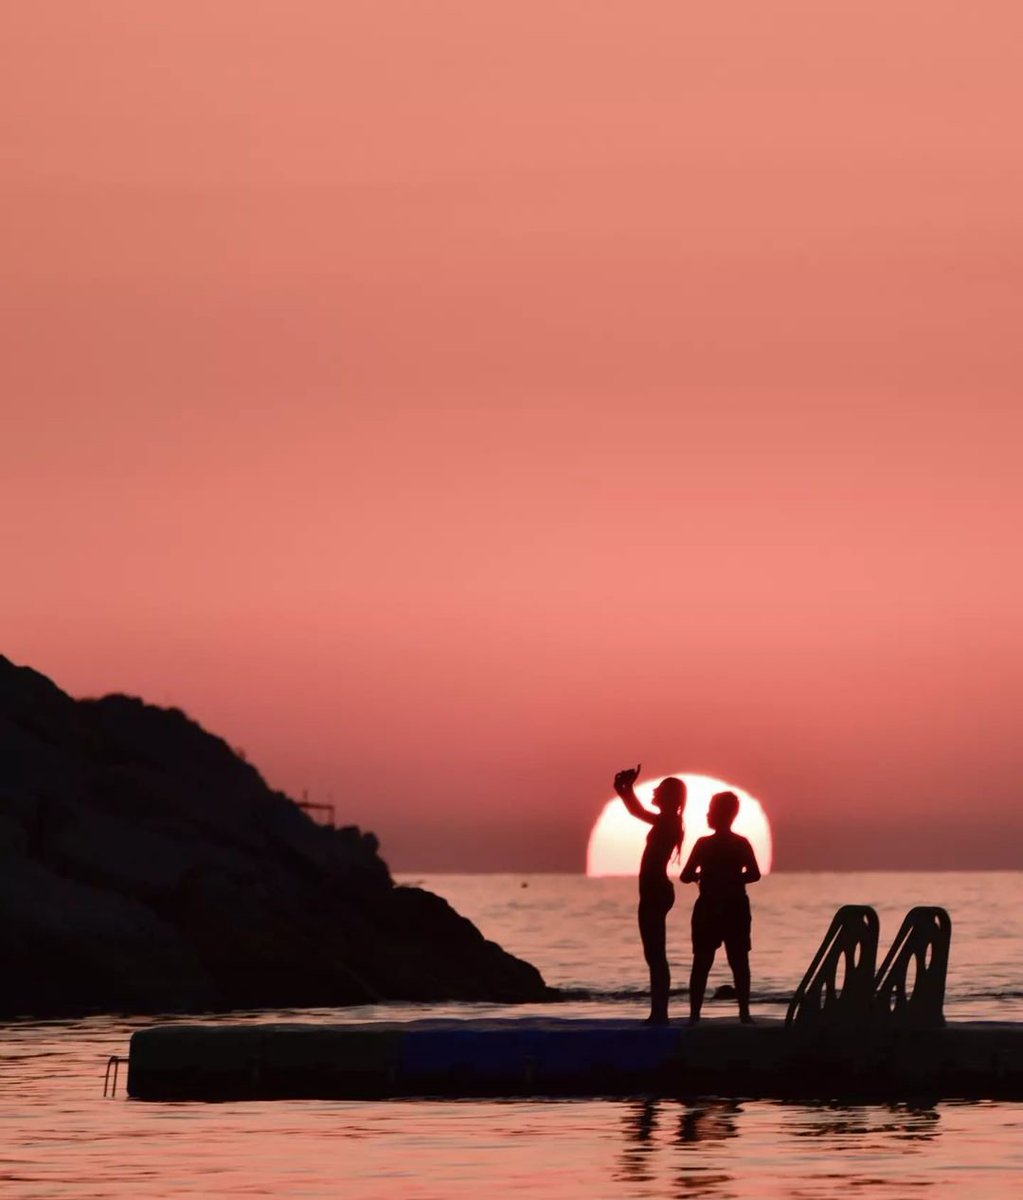 Make a wish 🤞🏻
#sunset #sunsetlovers #sunsetphotography #goodbyeAugust #lebanon #ThePhotoHour #StormHour #loveit